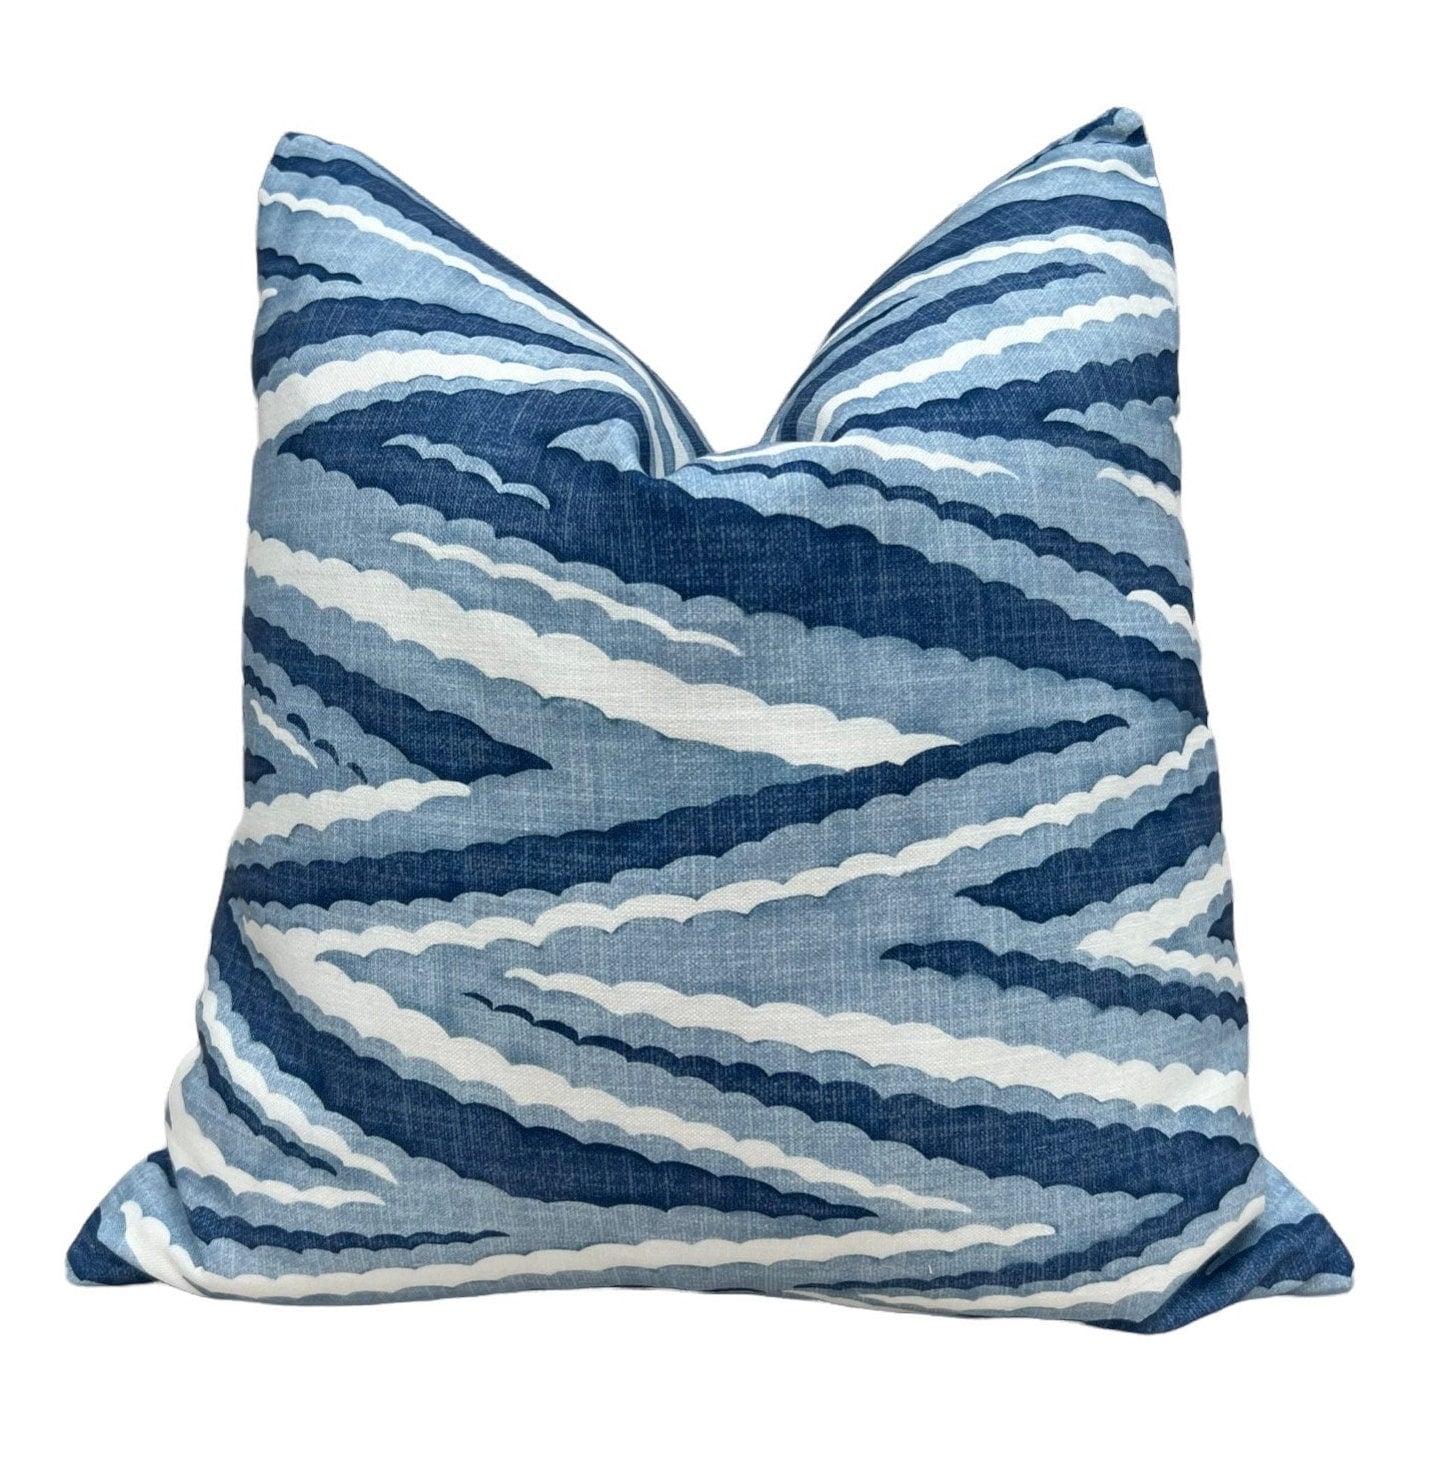 Thibaut Highland Peak in Blue. Designer Pillows, High End Pillows, Zig Zag Navy Blue and White Pillow Cover, Blue Stripes Pillow, Euro Sham